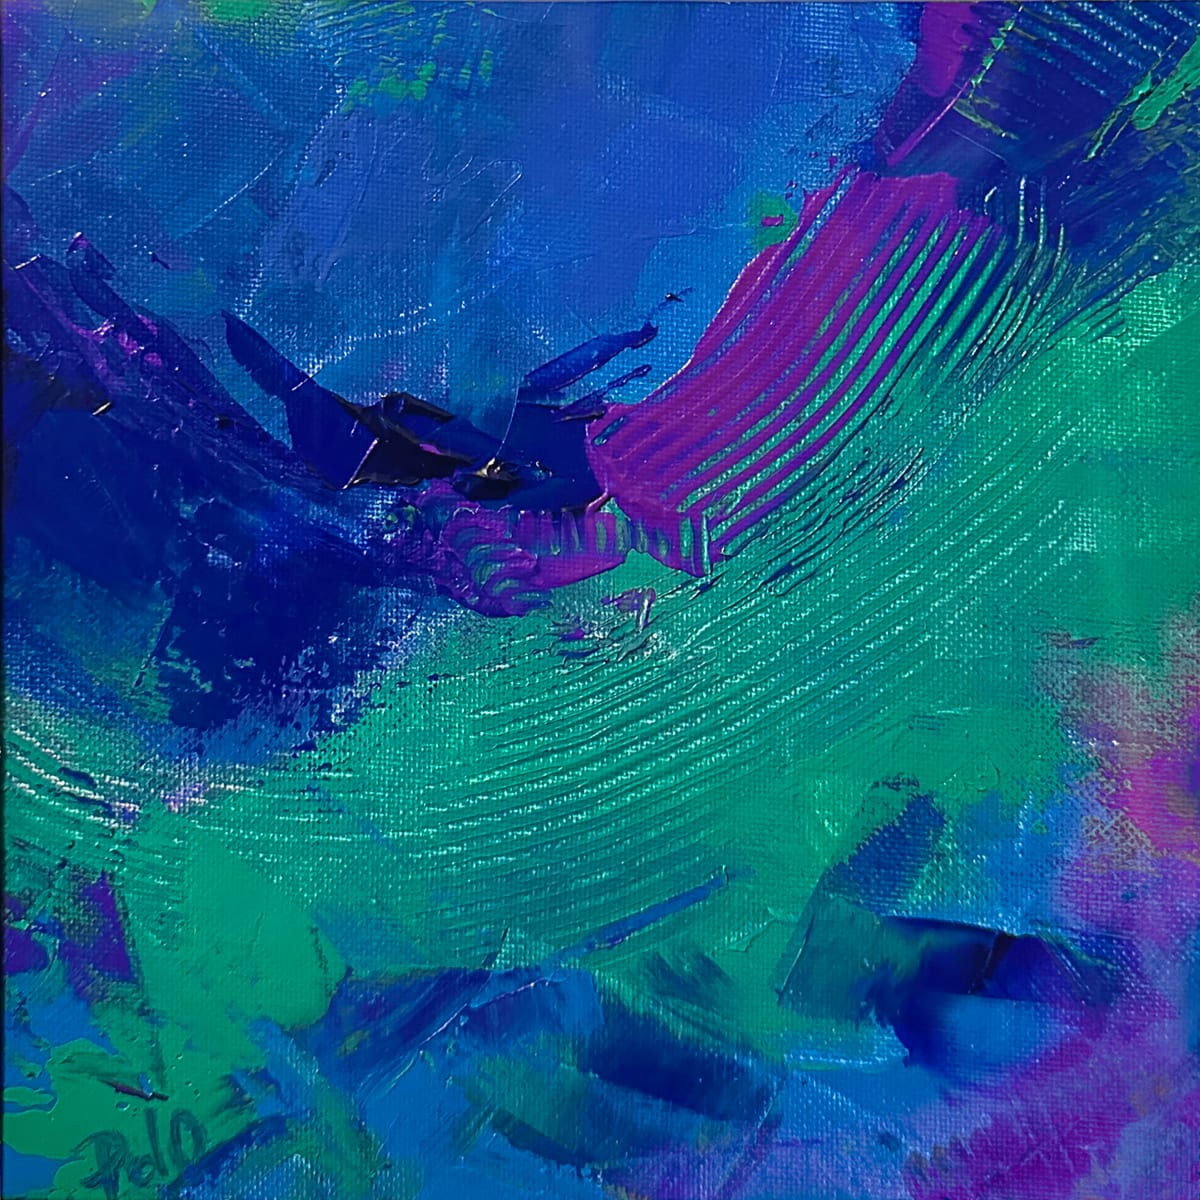 Deep Blue Sea I by Phyllis Mantik deQuevedo  Image: 10 x 10 - Acrylic on Canvas Board